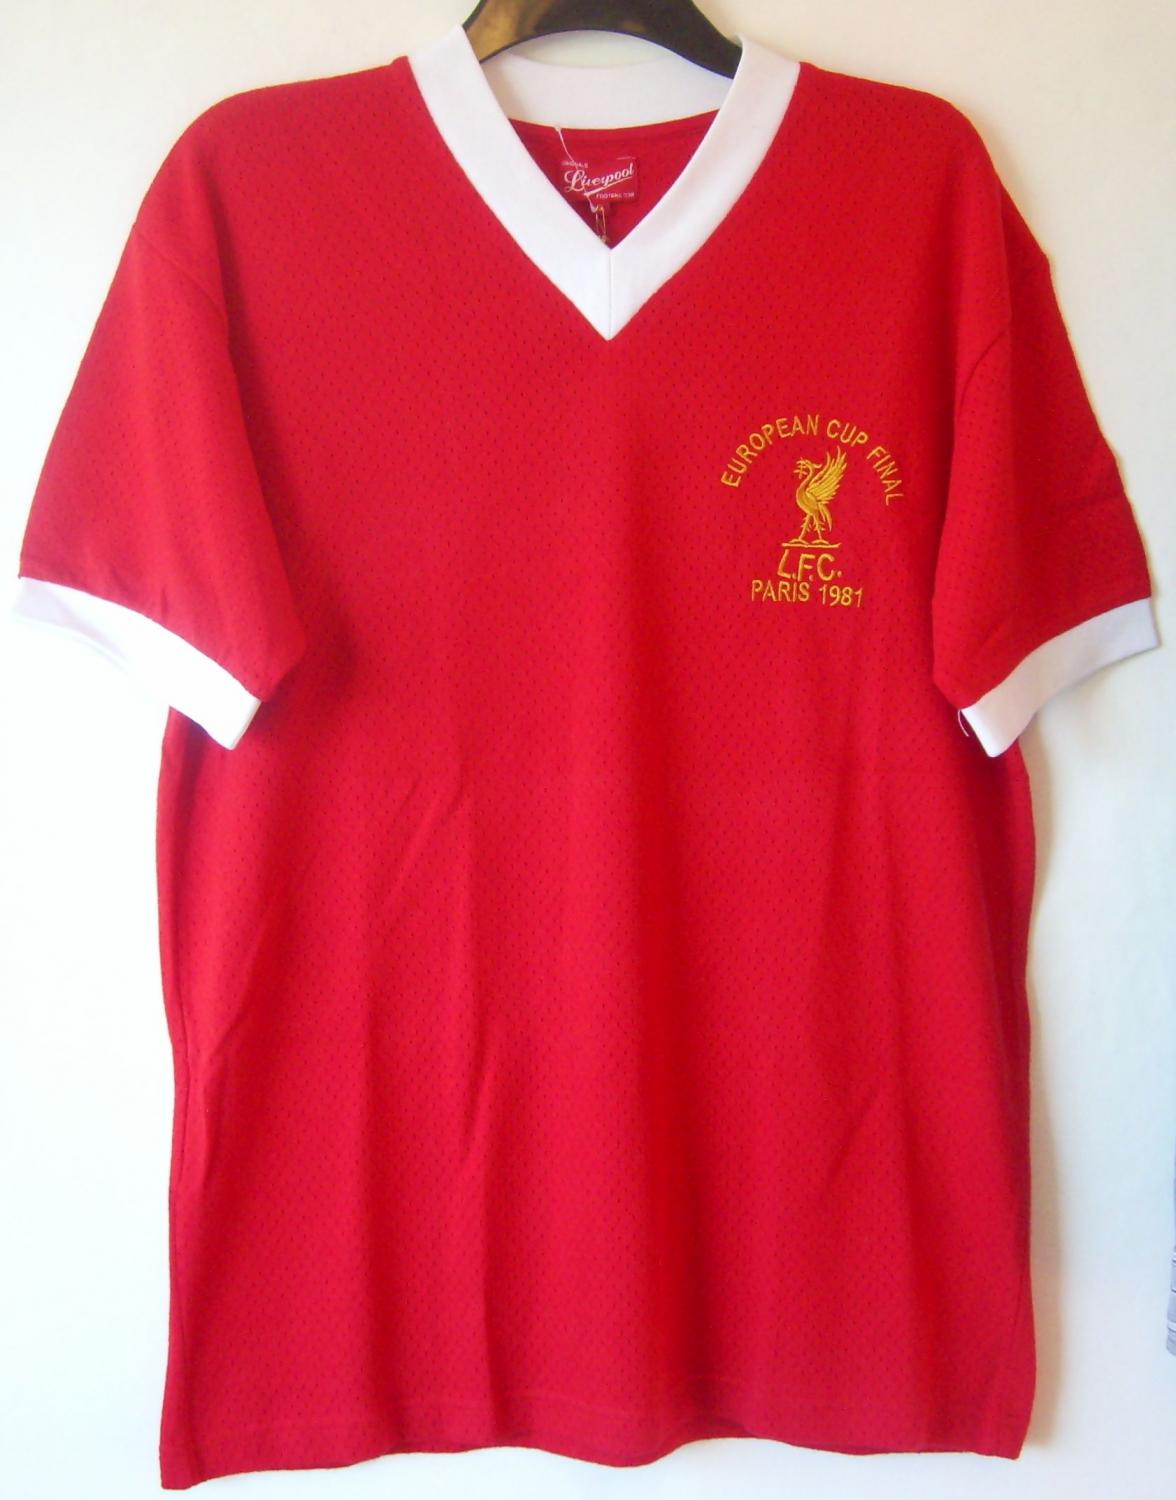 Liverpool Retro Replicas football shirt 1981. Added on 2014-01-30, 22:47